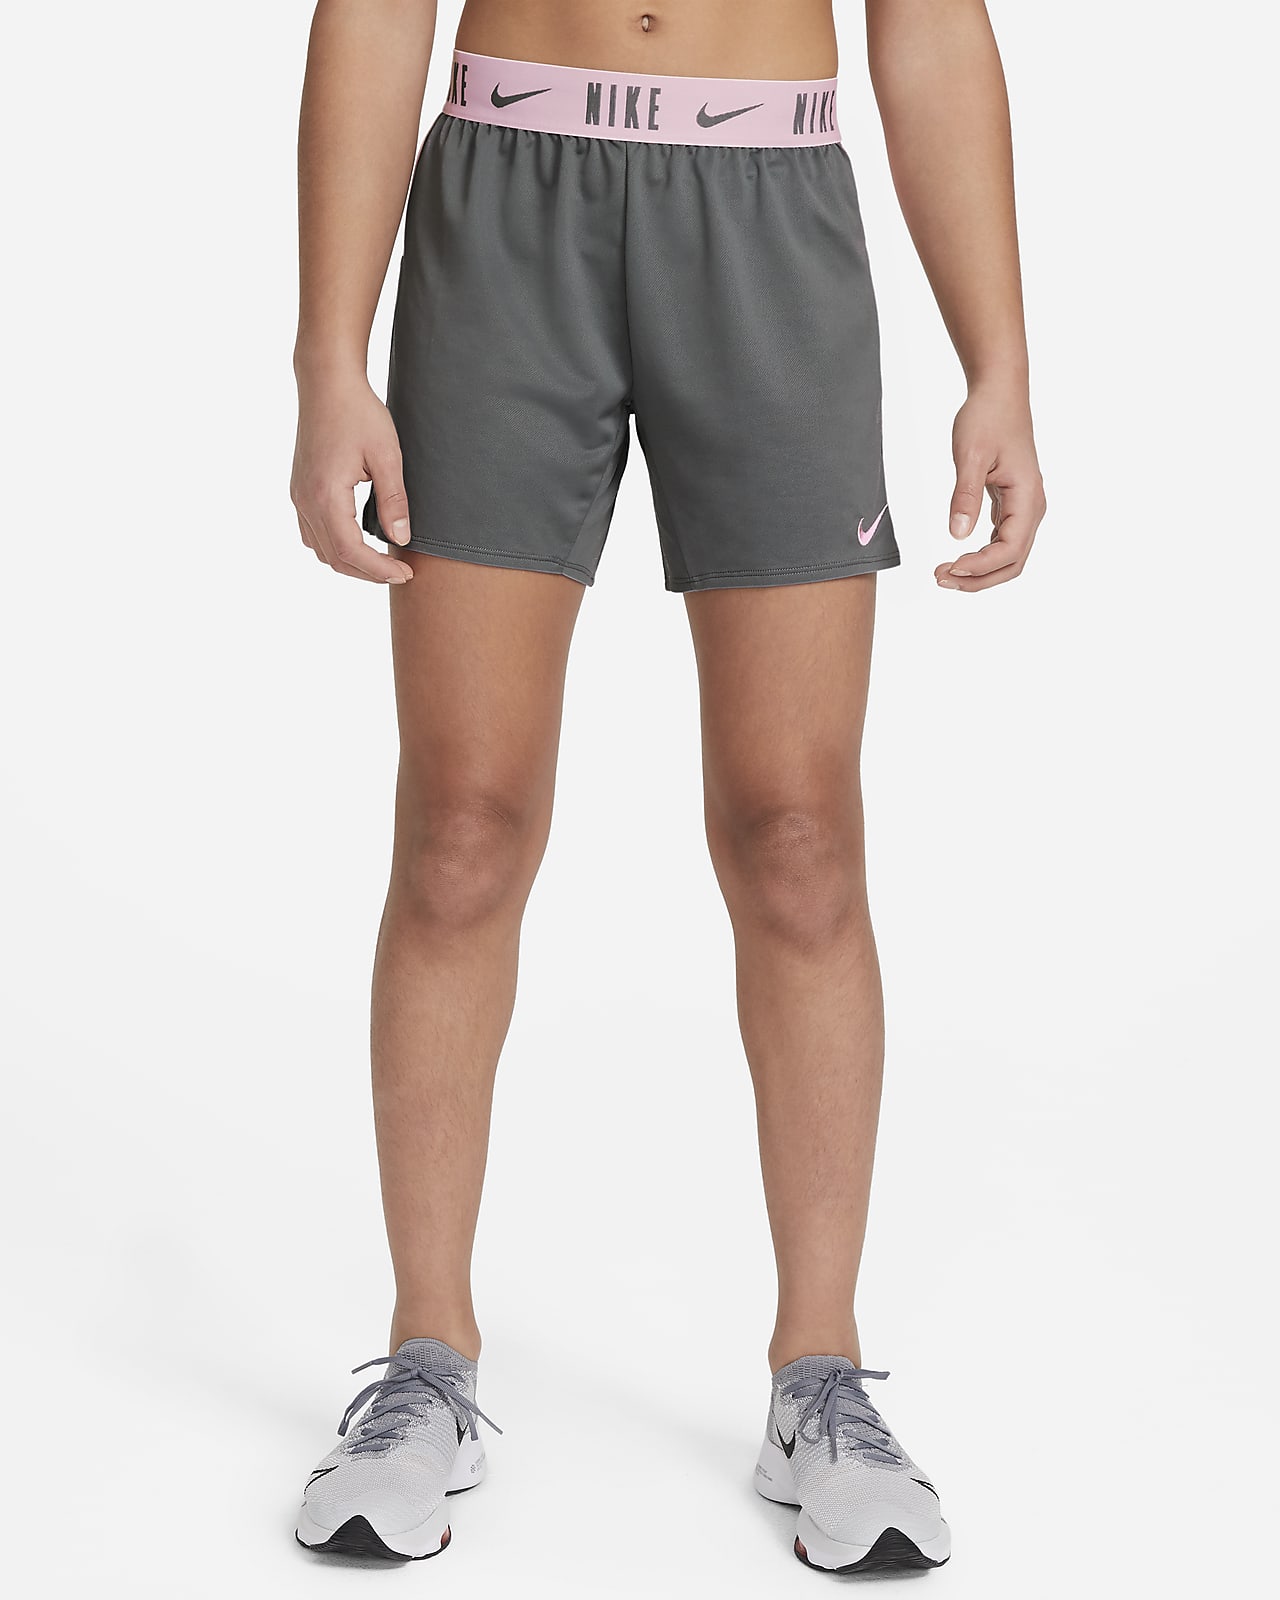 grey nike shorts girls